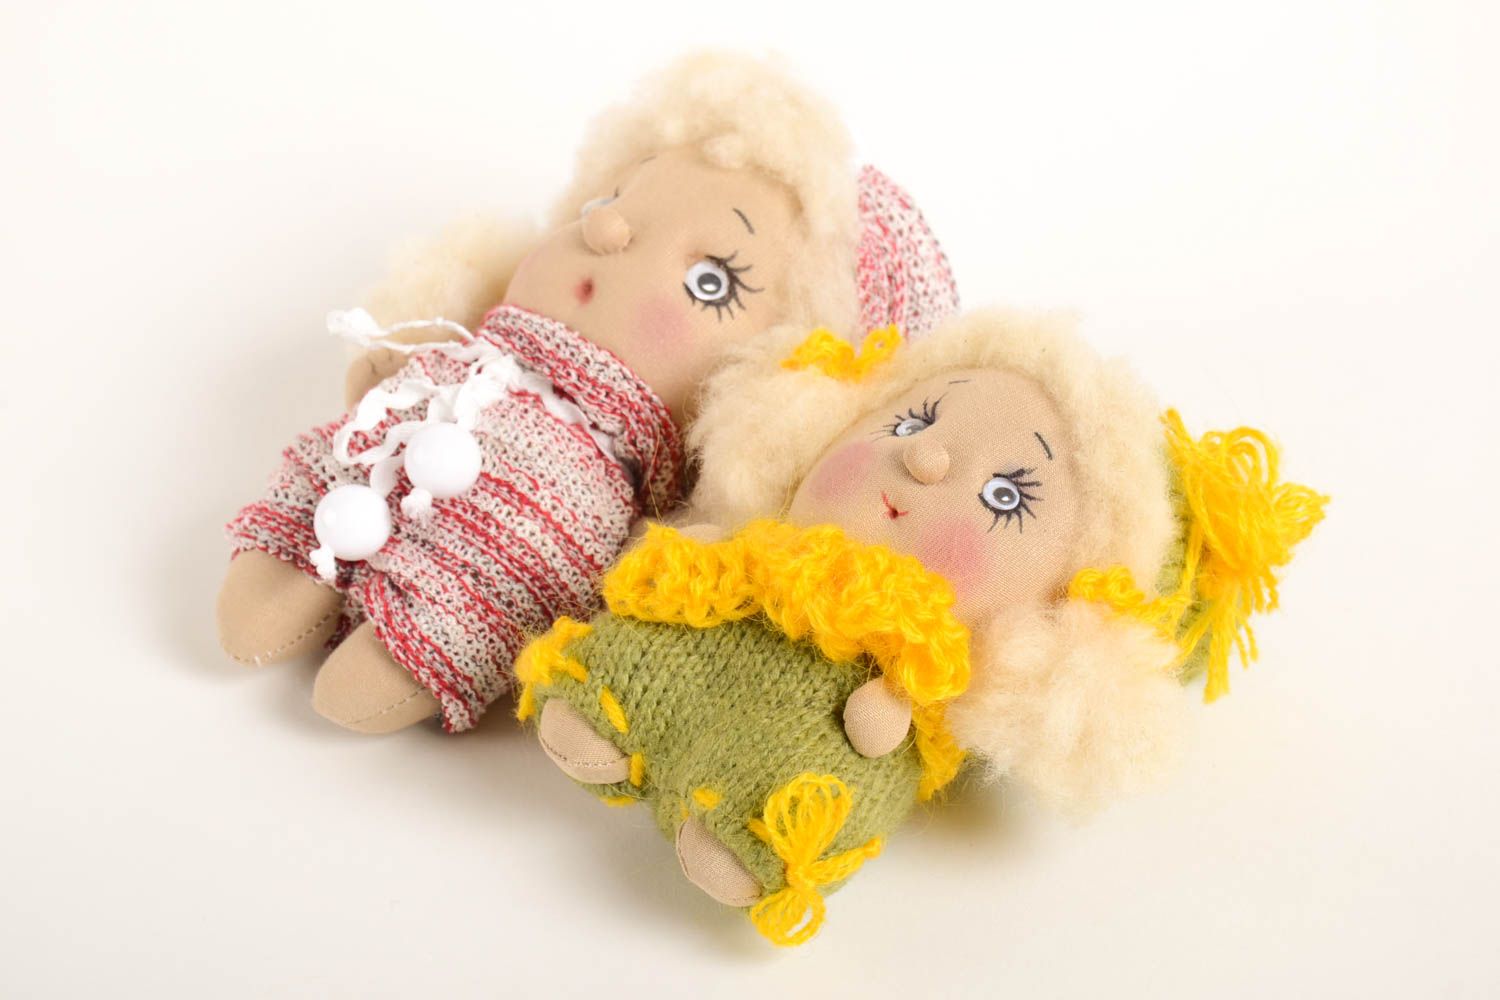 Handmade stuffed toys for children cute toys nursery decor ideas gift for baby photo 4